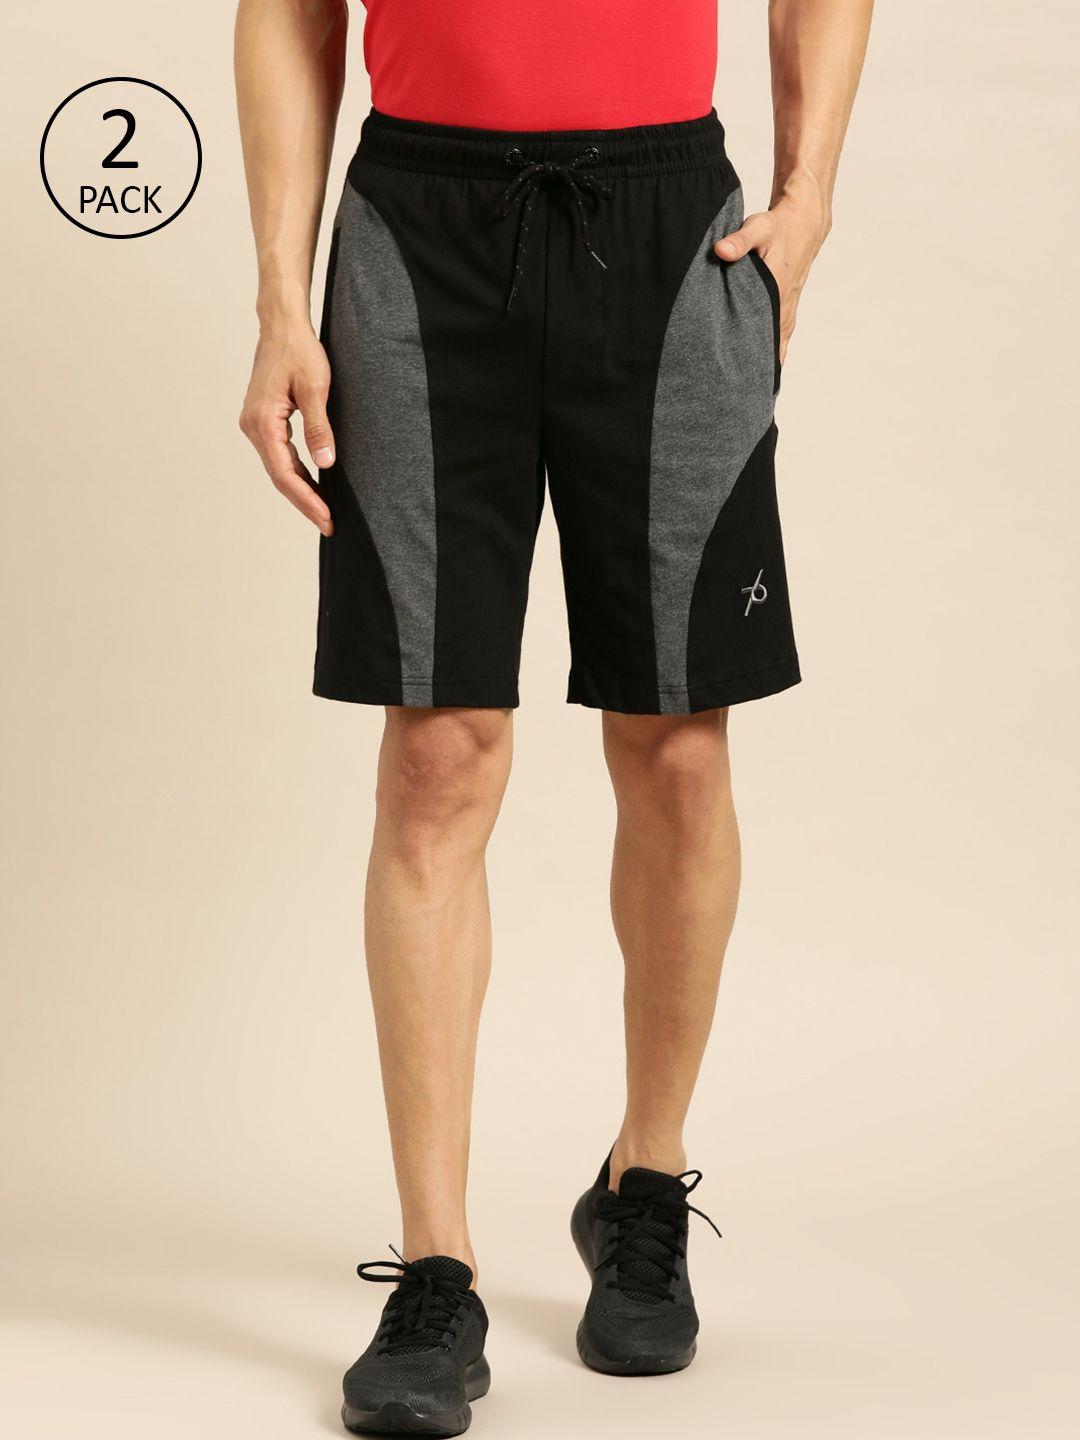 jockey men pack of 2 black & charcoal grey colourblocked straight fit sport shorts